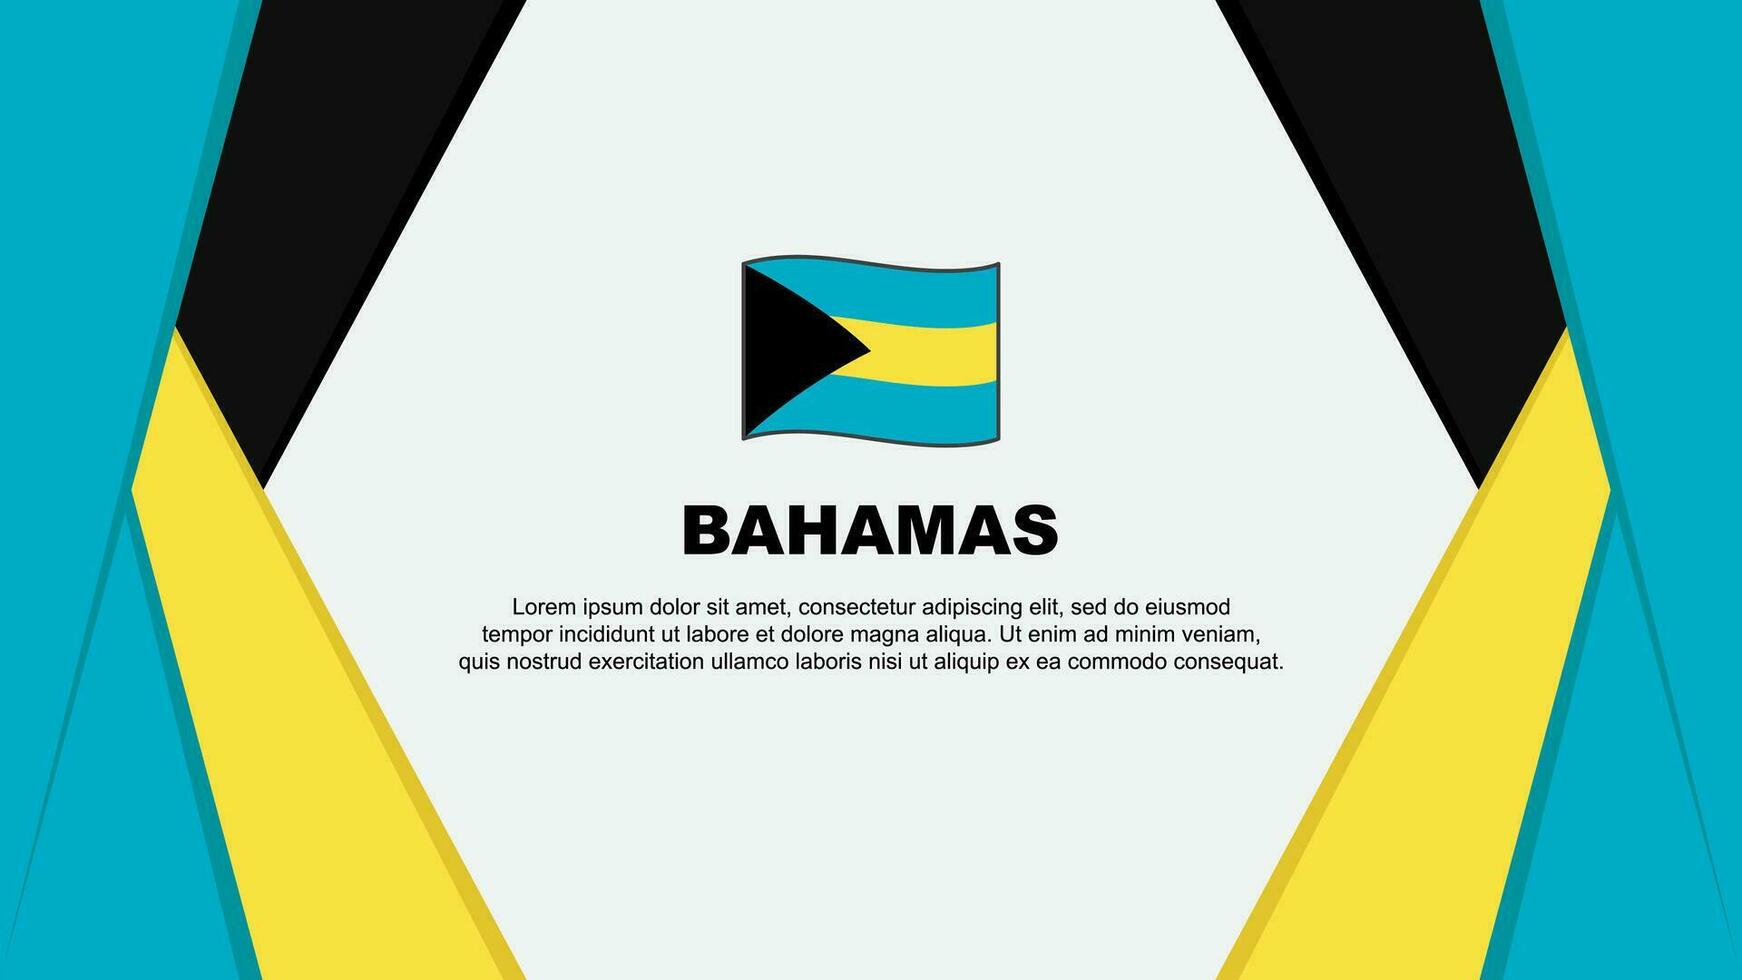 Bahamas Flagge abstrakt Hintergrund Design Vorlage. Bahamas Unabhängigkeit Tag Banner Karikatur Vektor Illustration. Bahamas Hintergrund